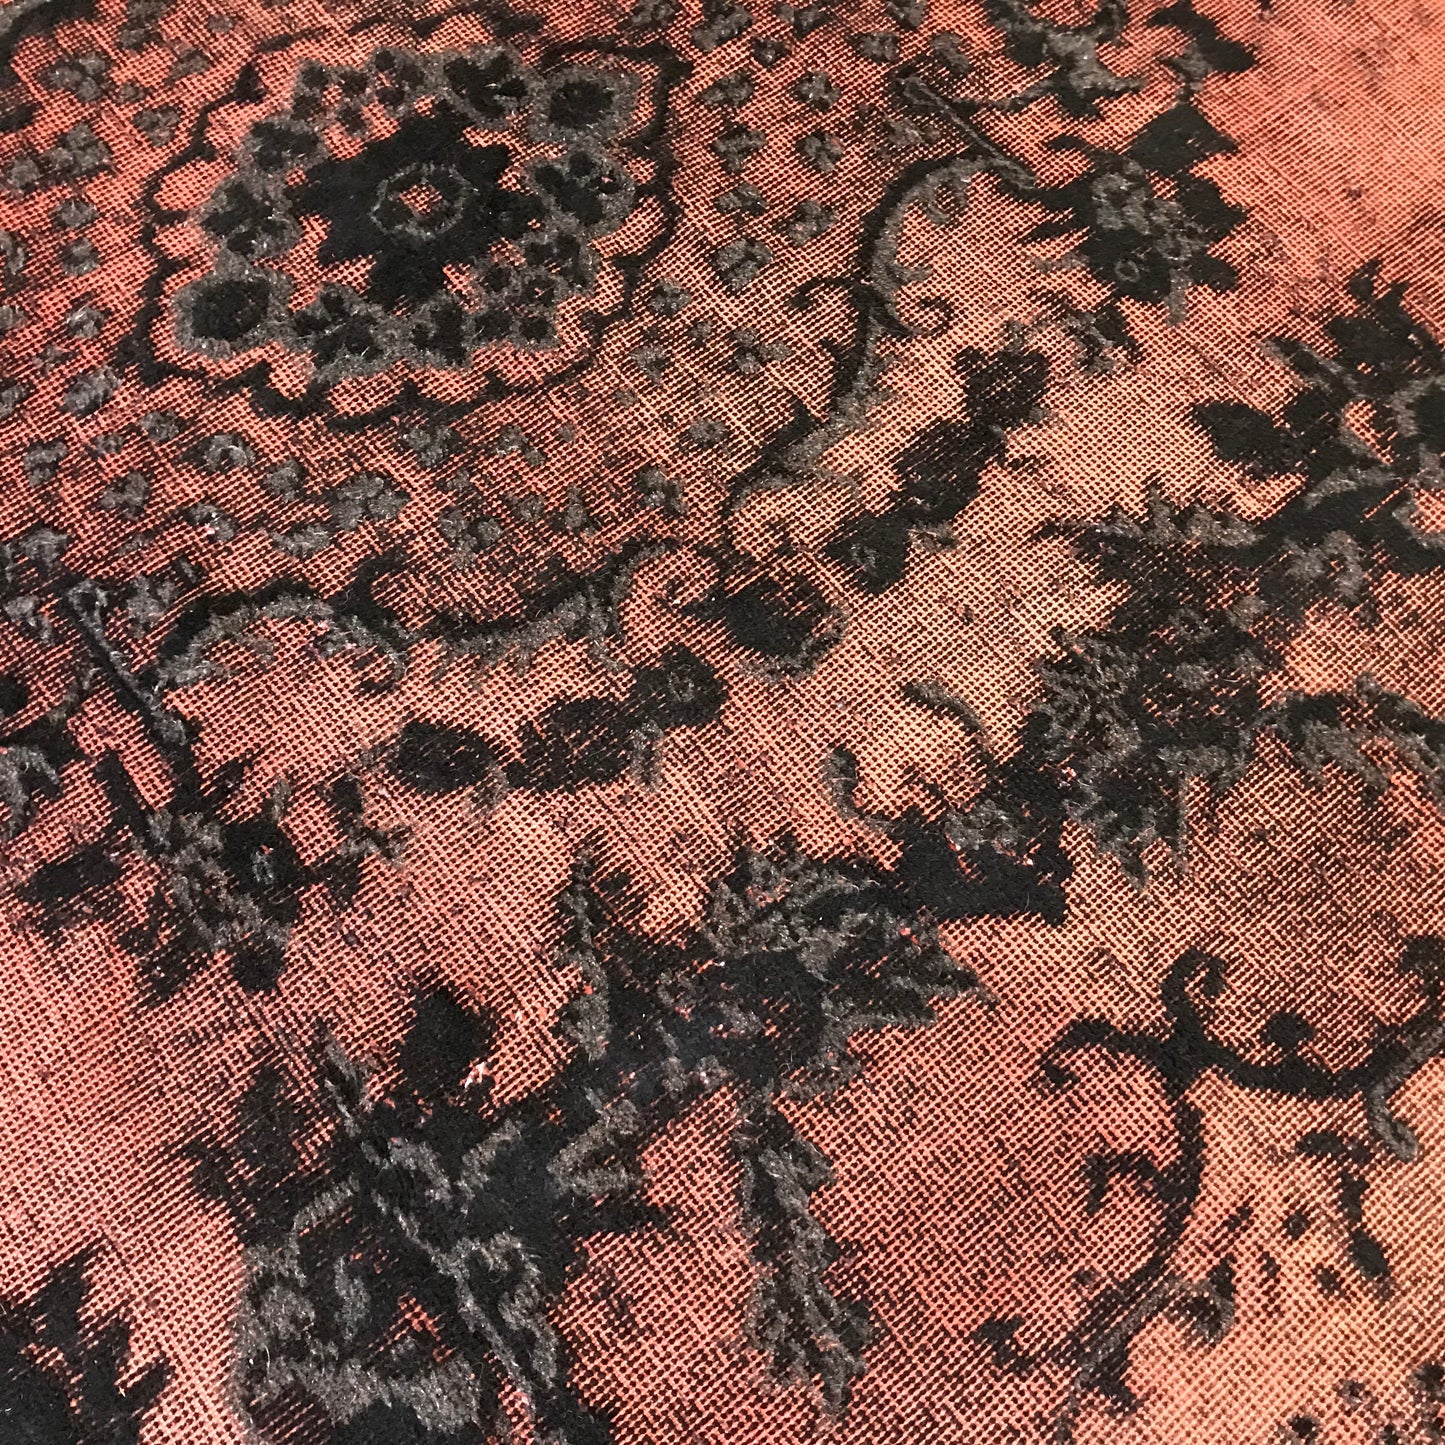 Antique Artisan Re-Worked Turkish Carpet Black & Peach